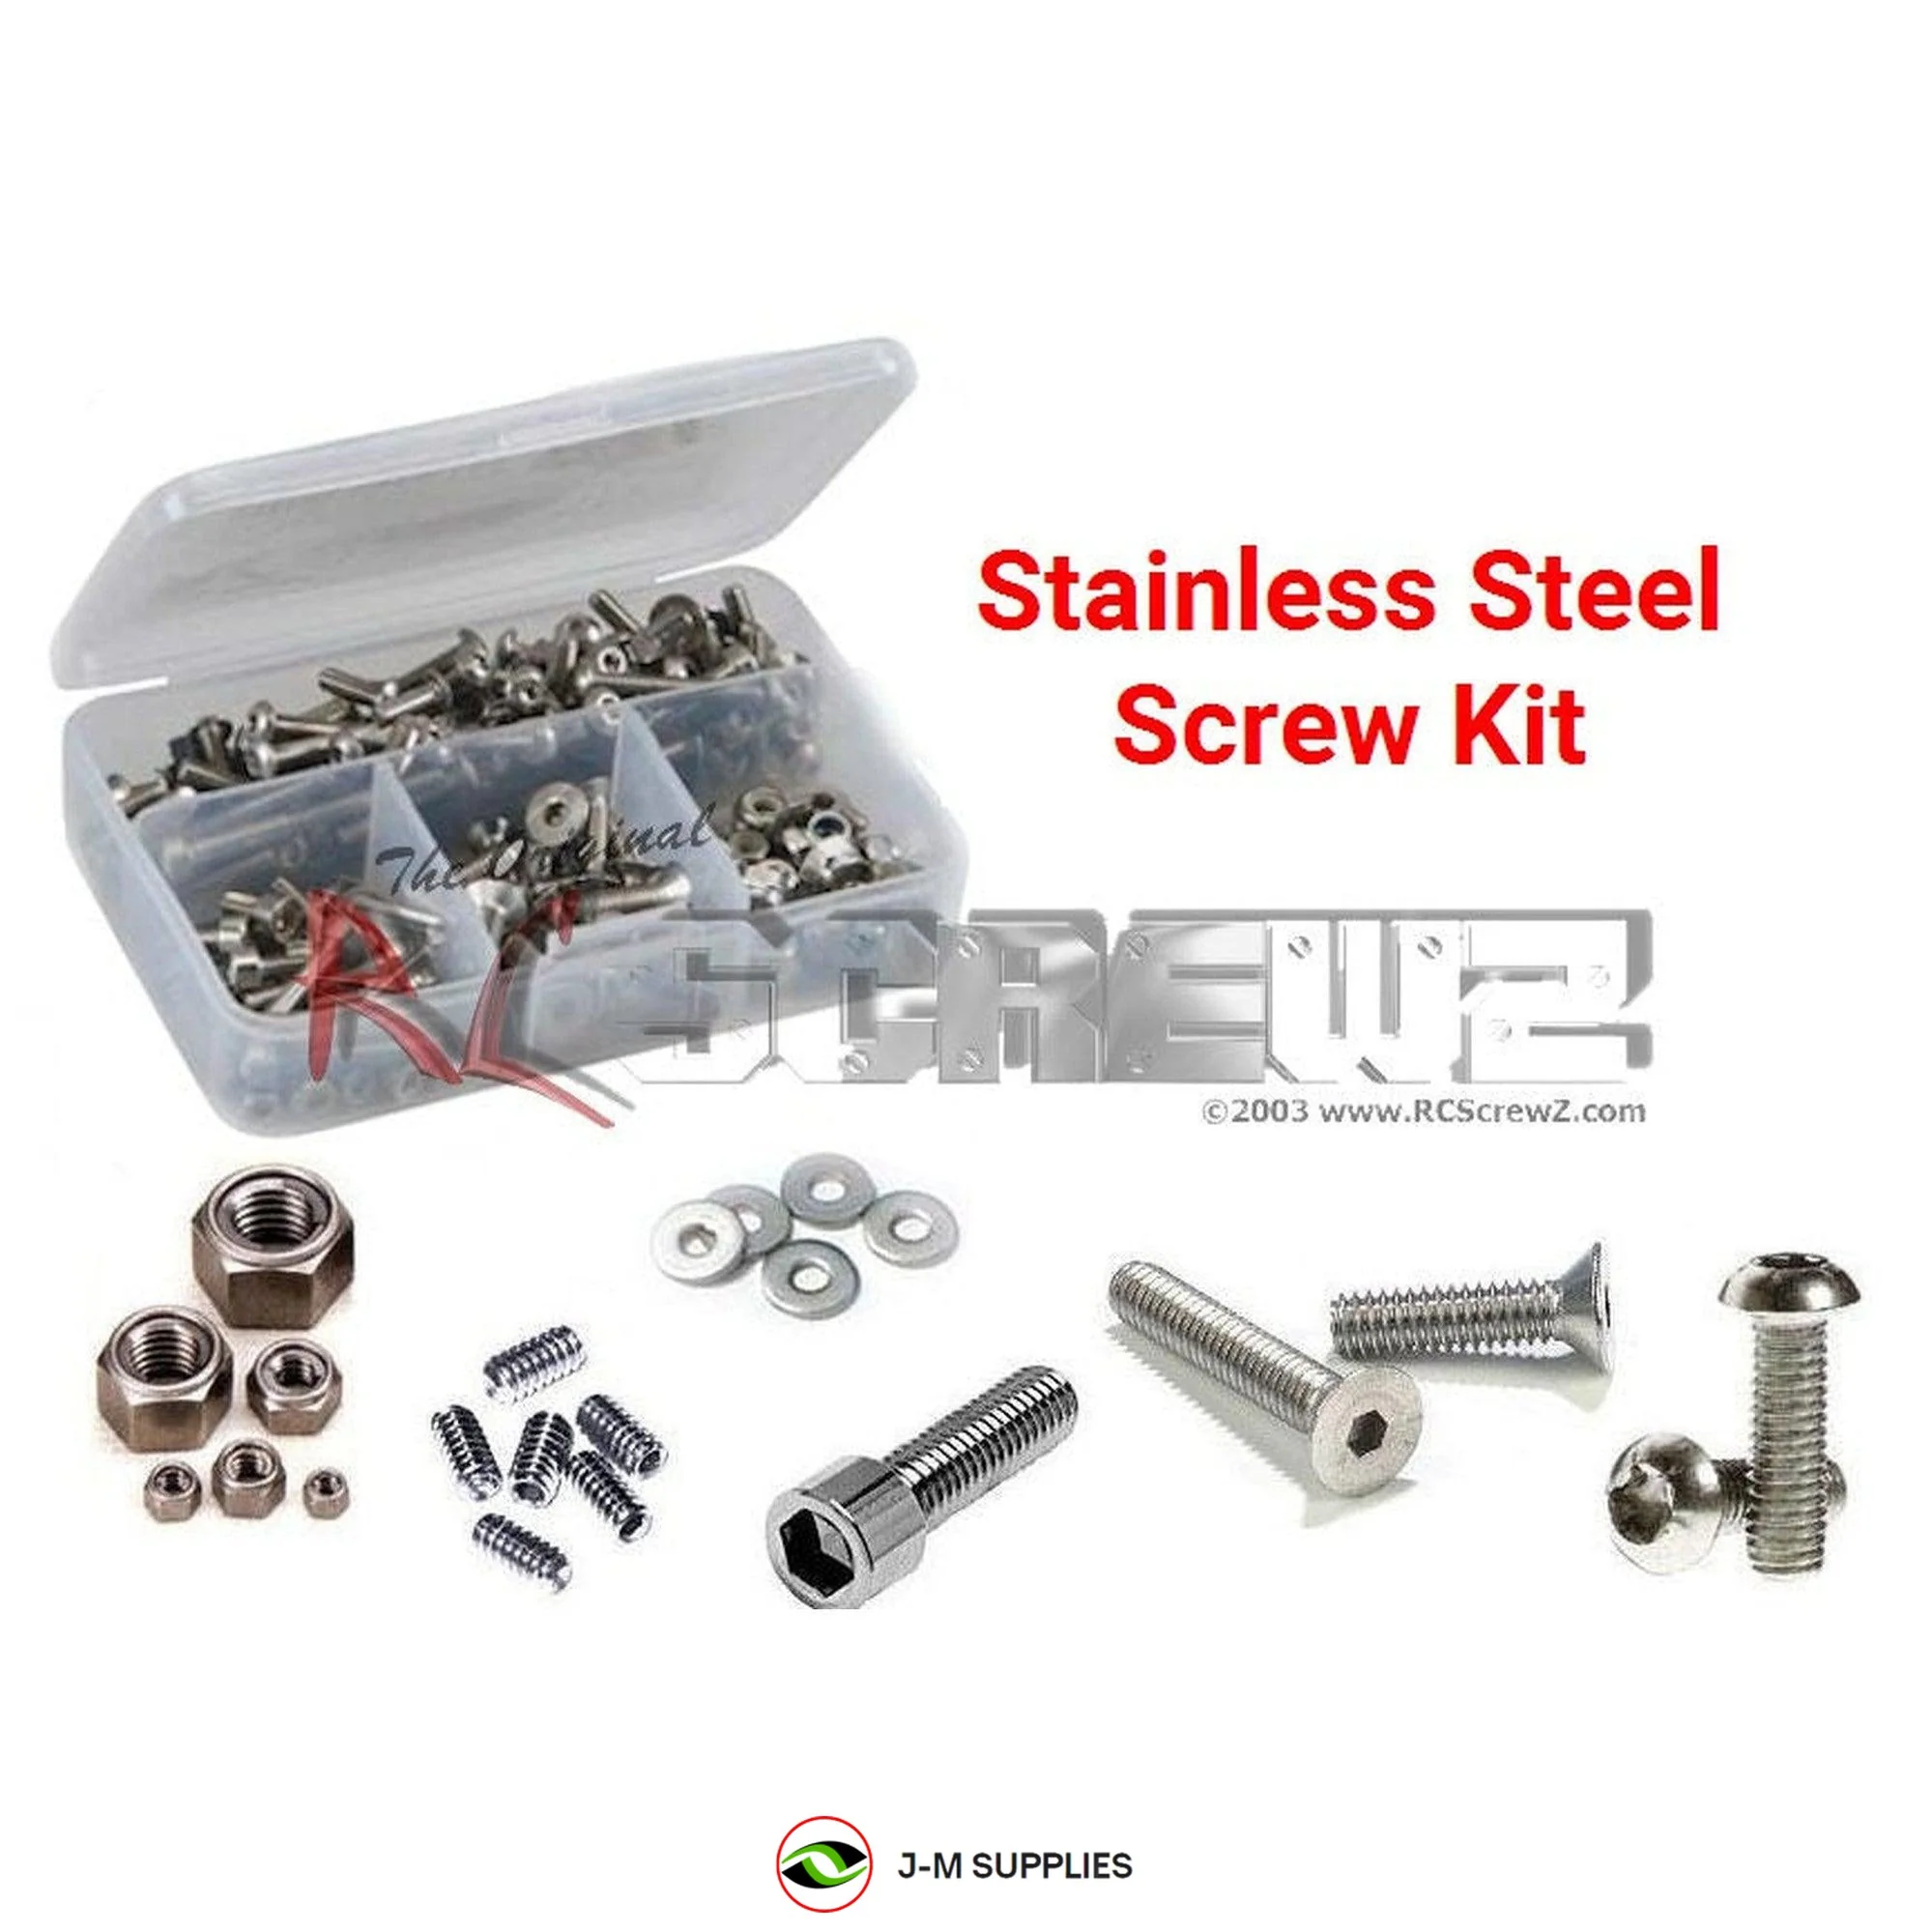 RCScrewZ Stainless Steel Screw Kit gob016 for Goblin 700 Raw Nitro Heli #SG737 - Picture 1 of 12